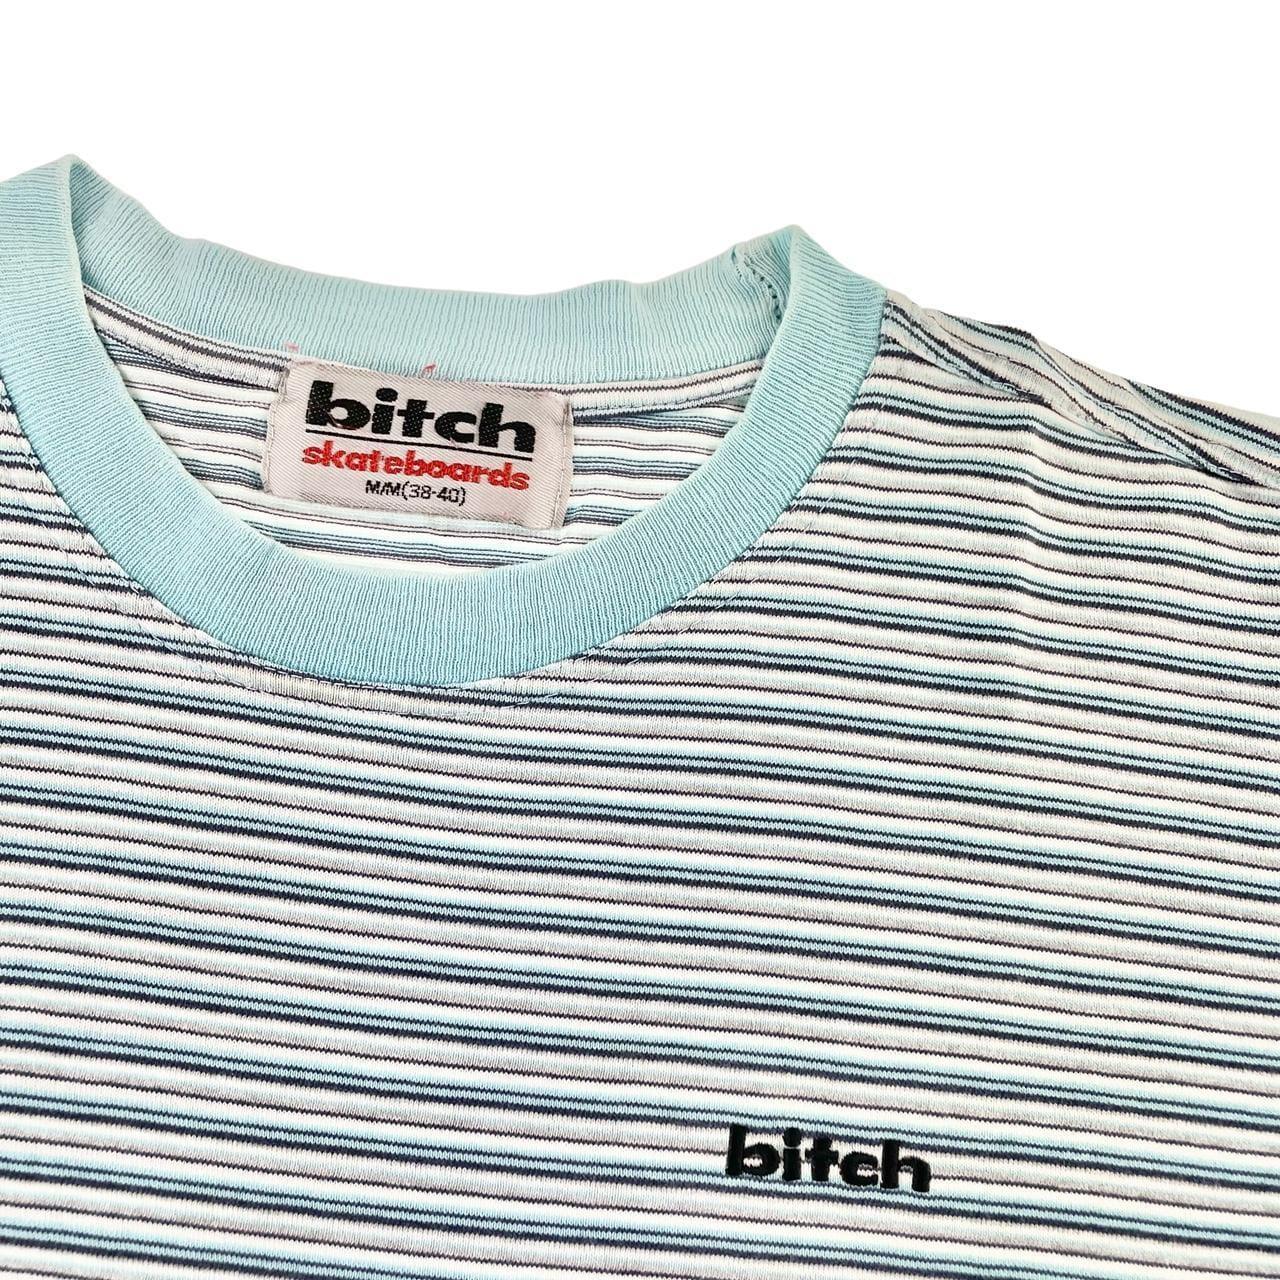 Vintage Bitch Skateboards striped t shirt size XS - Known Source